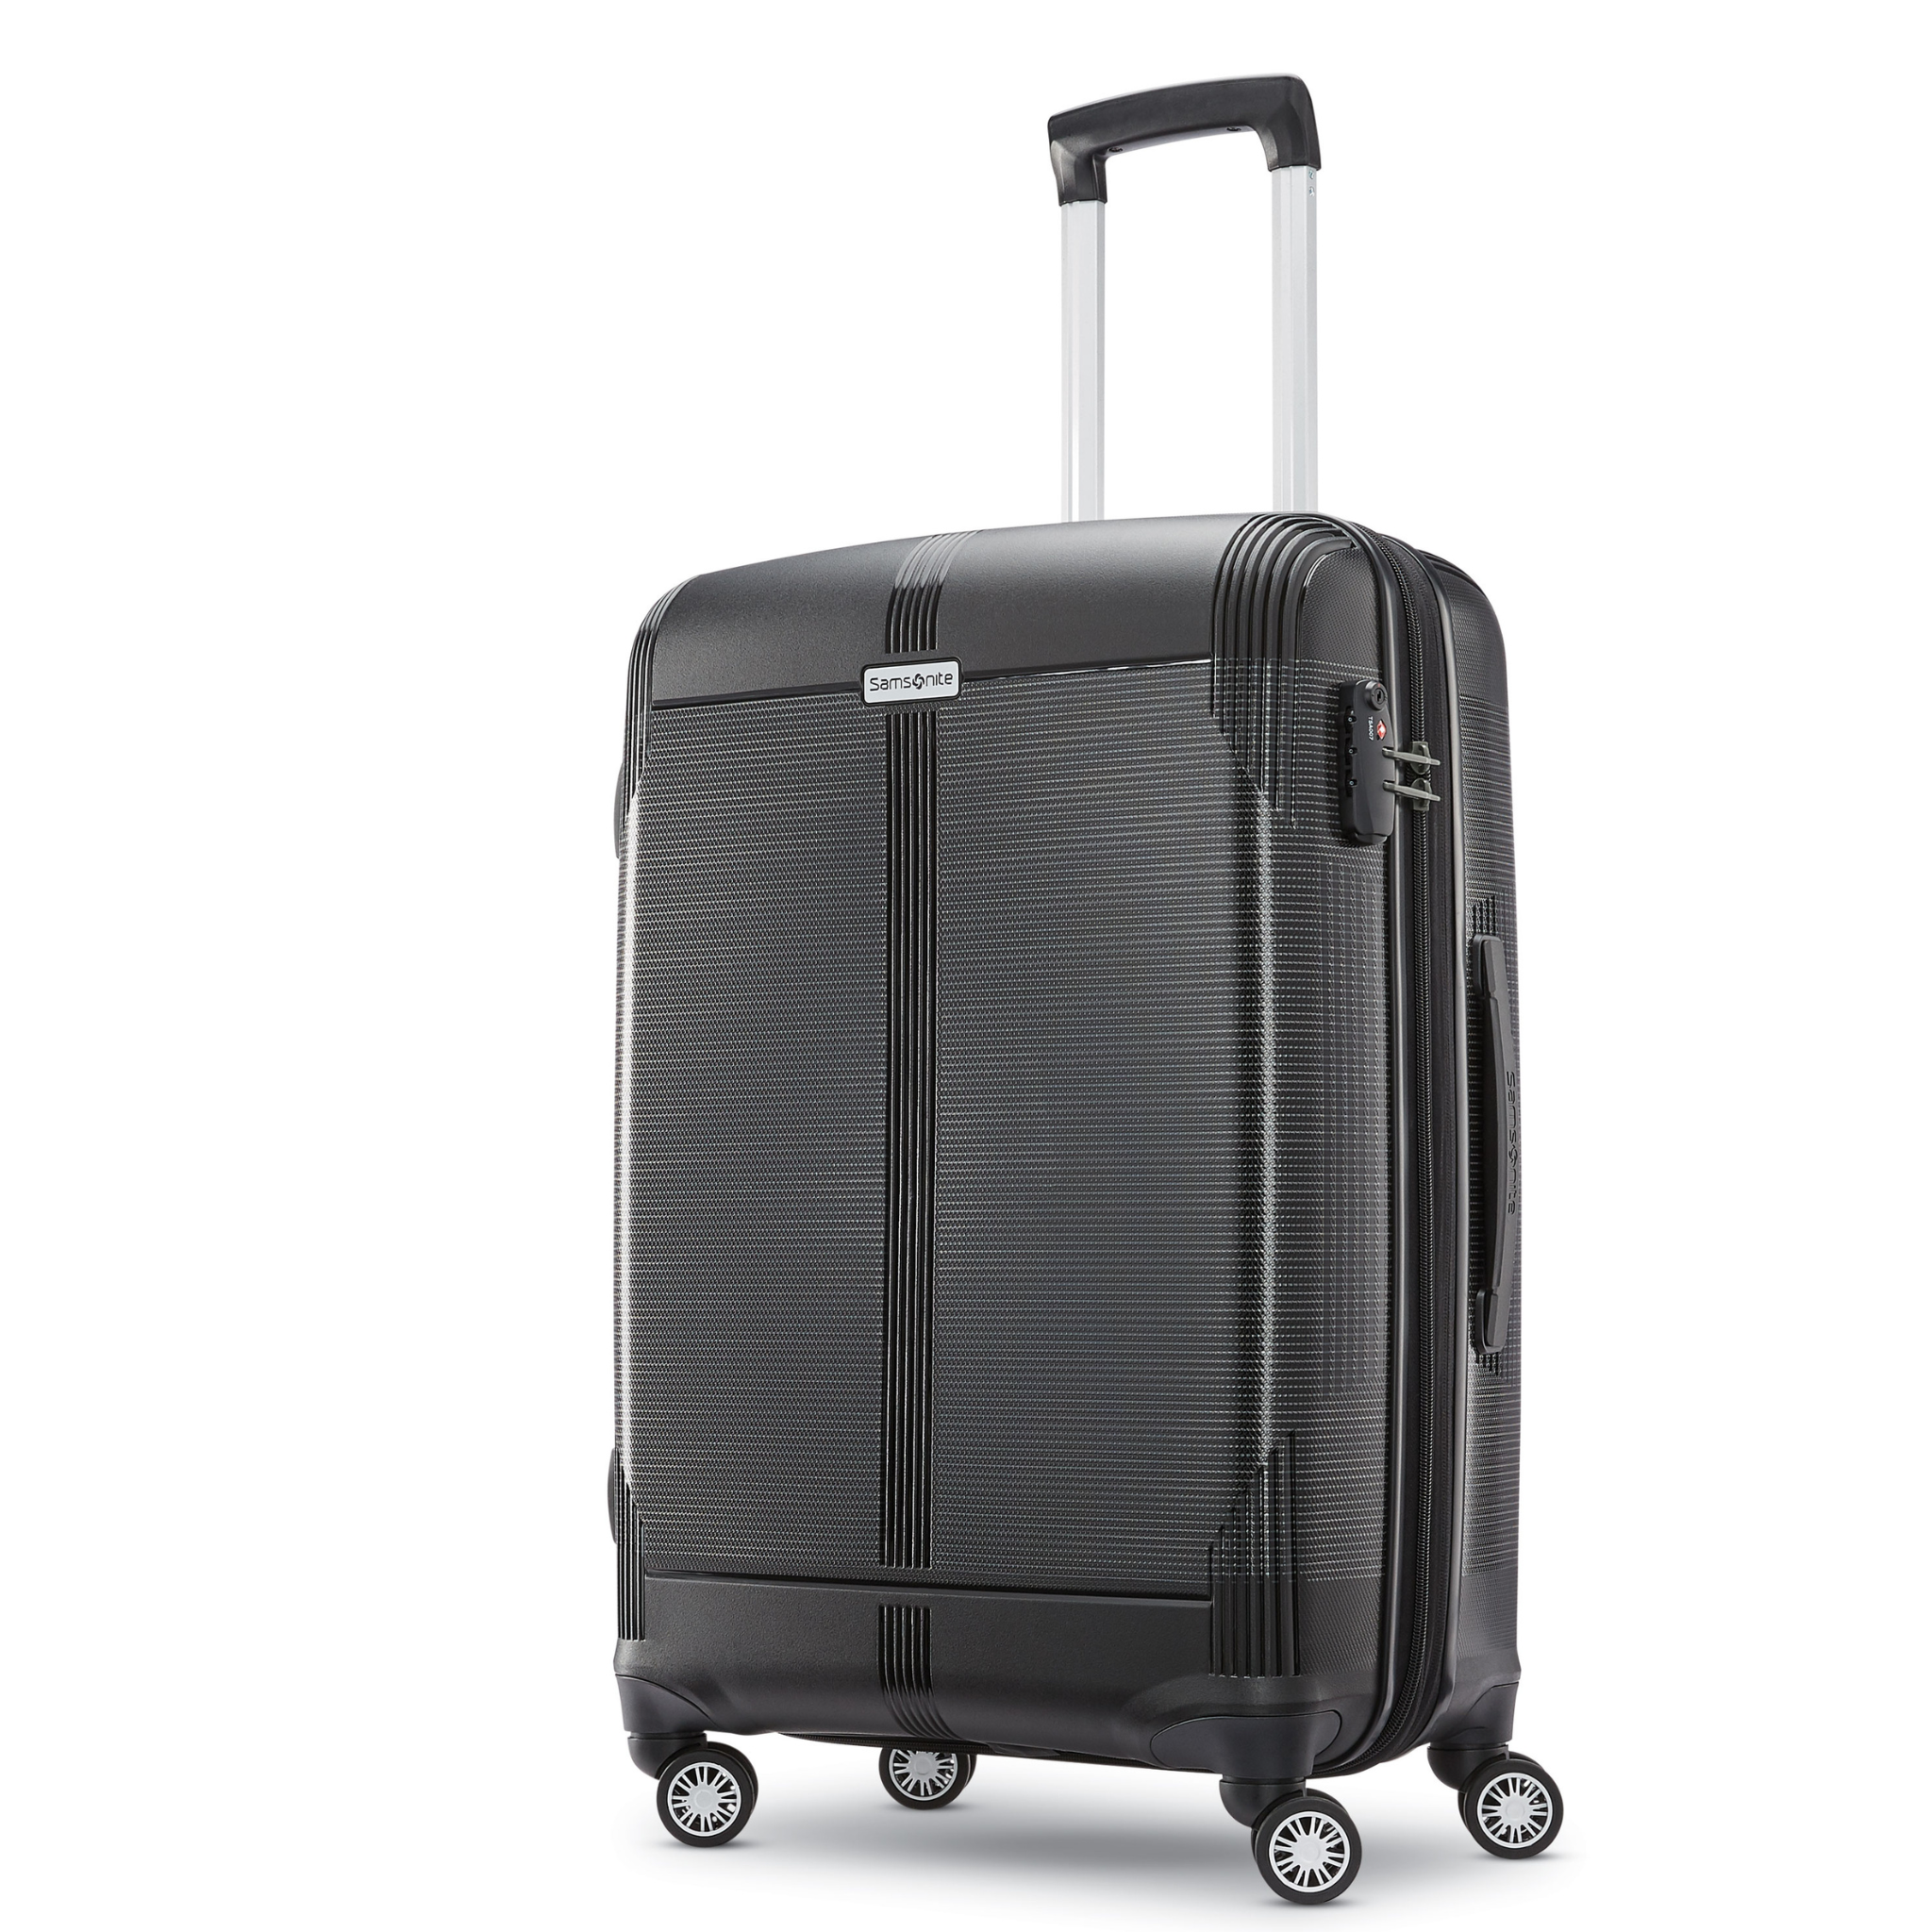 Samsonite Supra DLX Medium Spinner Luggage